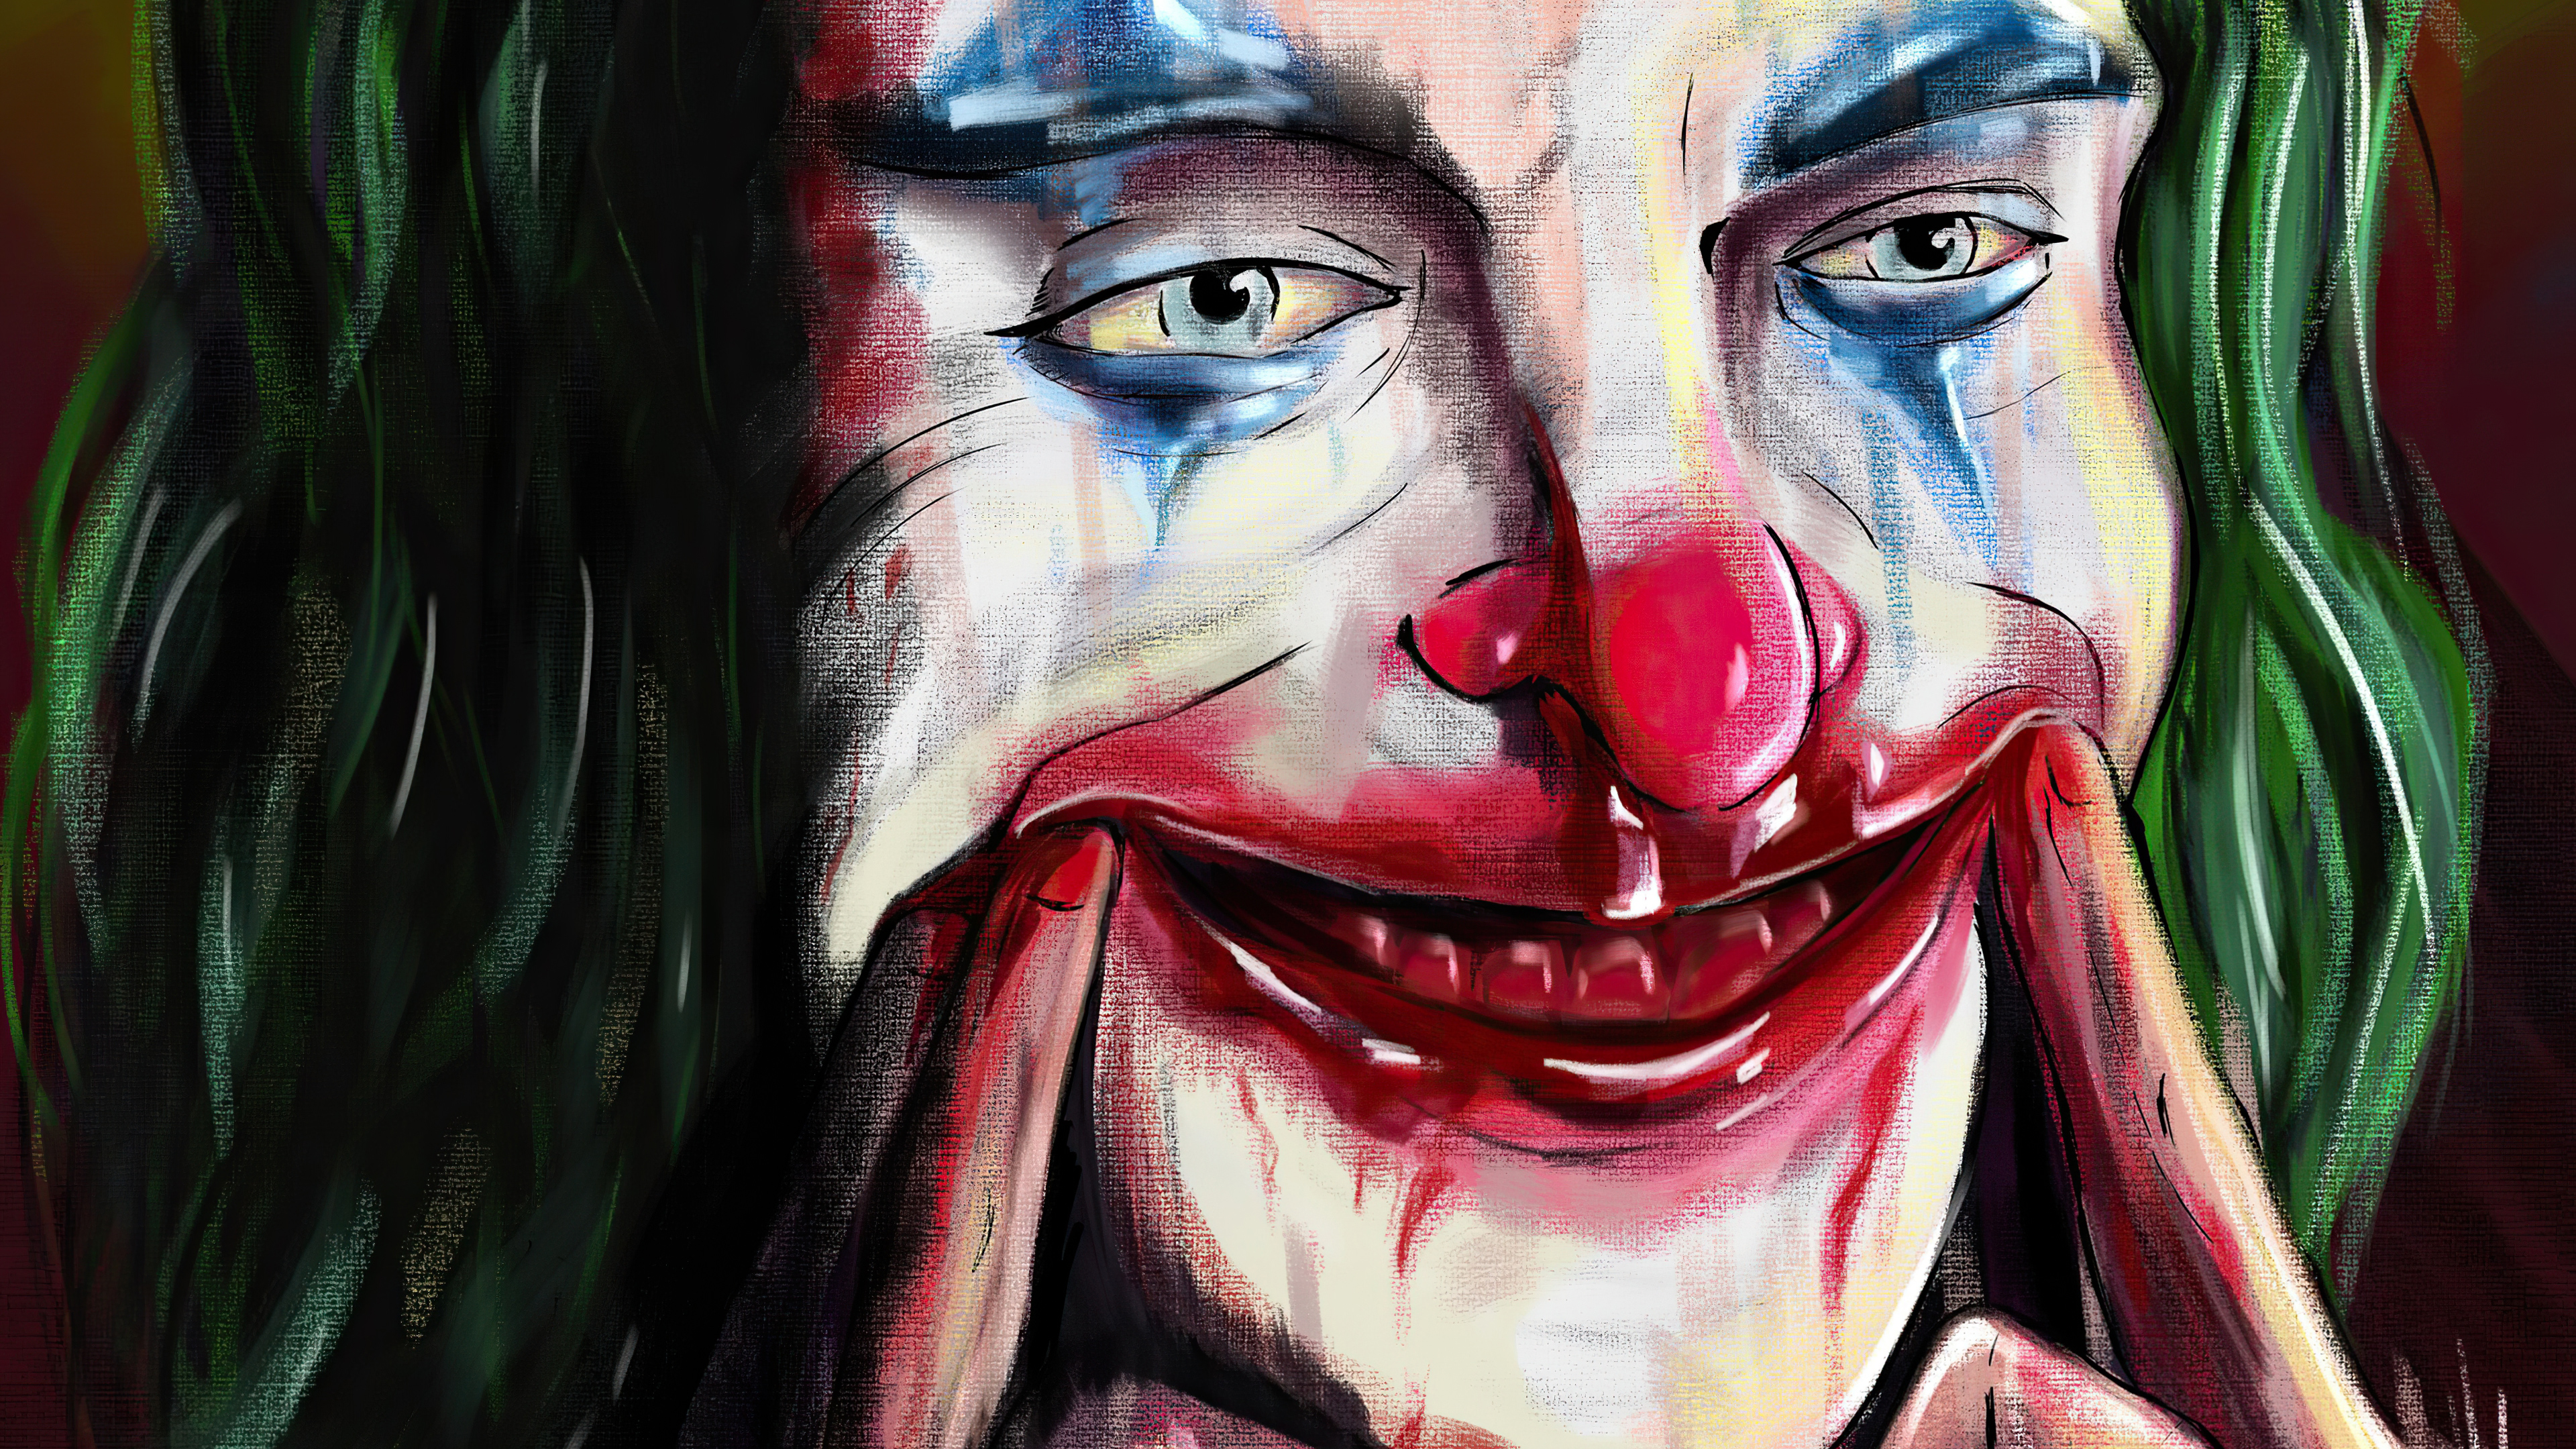 Joker Digital Painting 4k, HD Superheroes, 4k Wallpaper, Image, Background, Photo and Picture